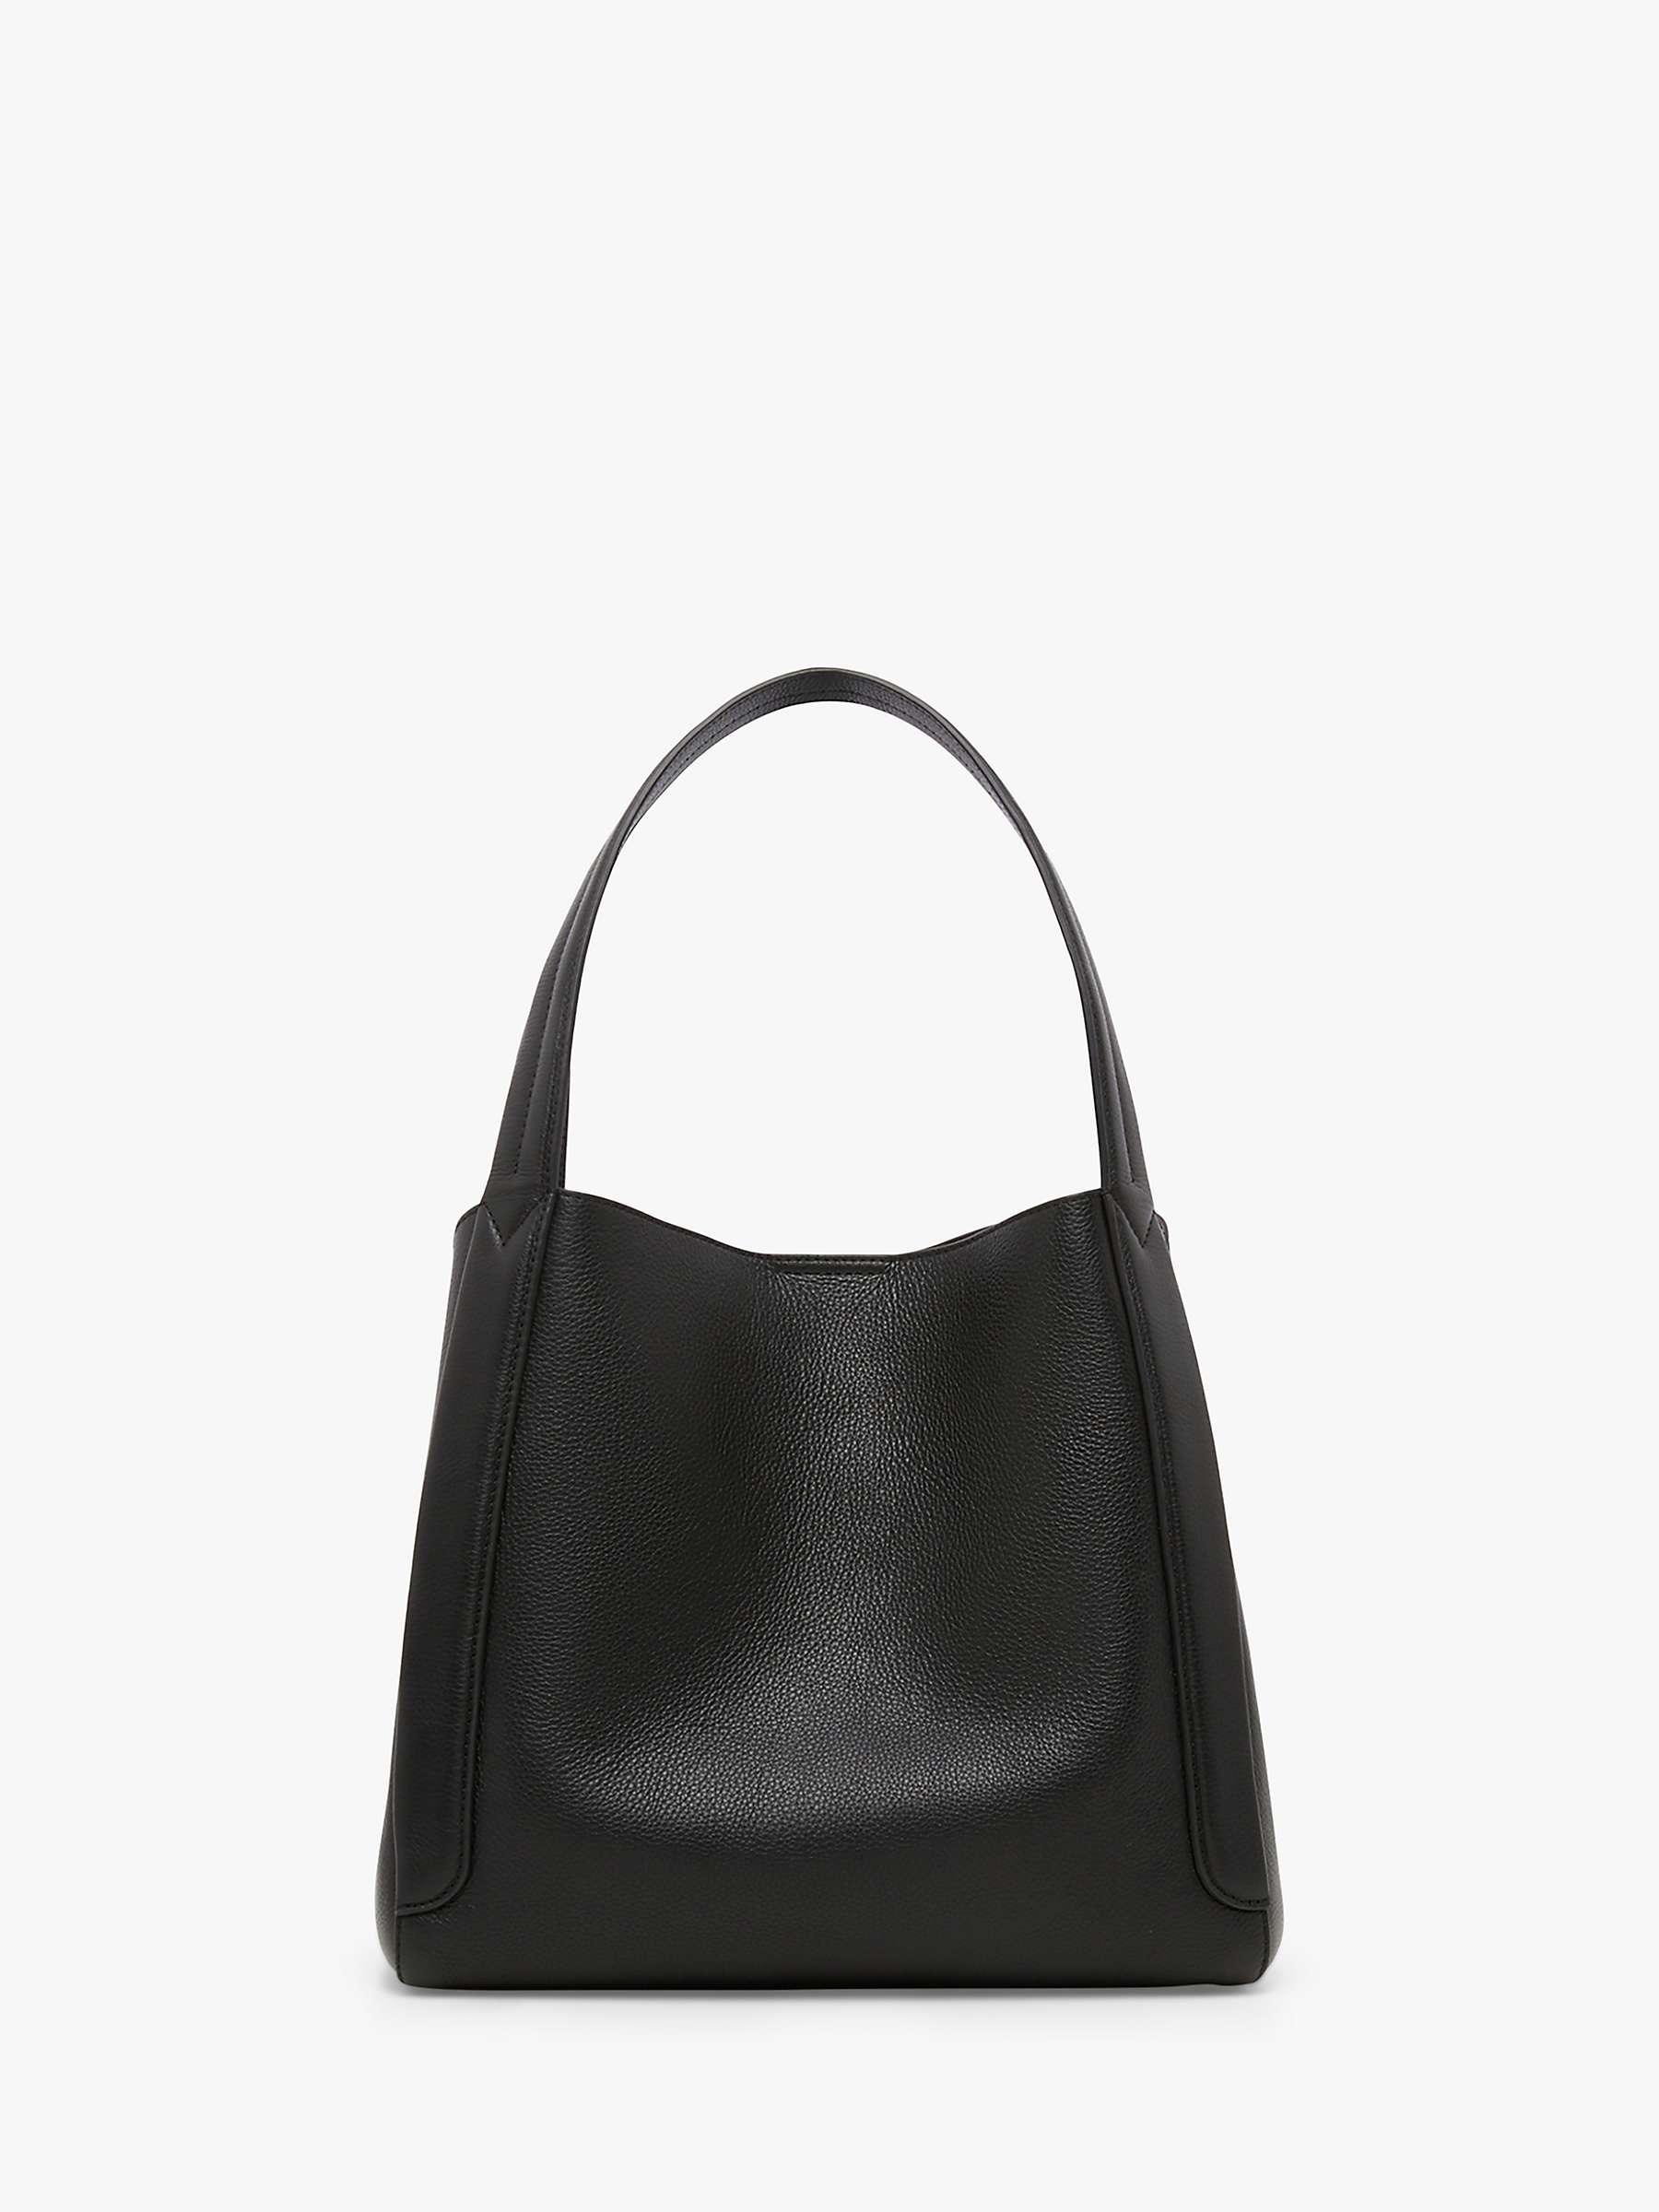 Buy Jasper Conran London Darcey Three Section Leather Hobo Bag Online at johnlewis.com